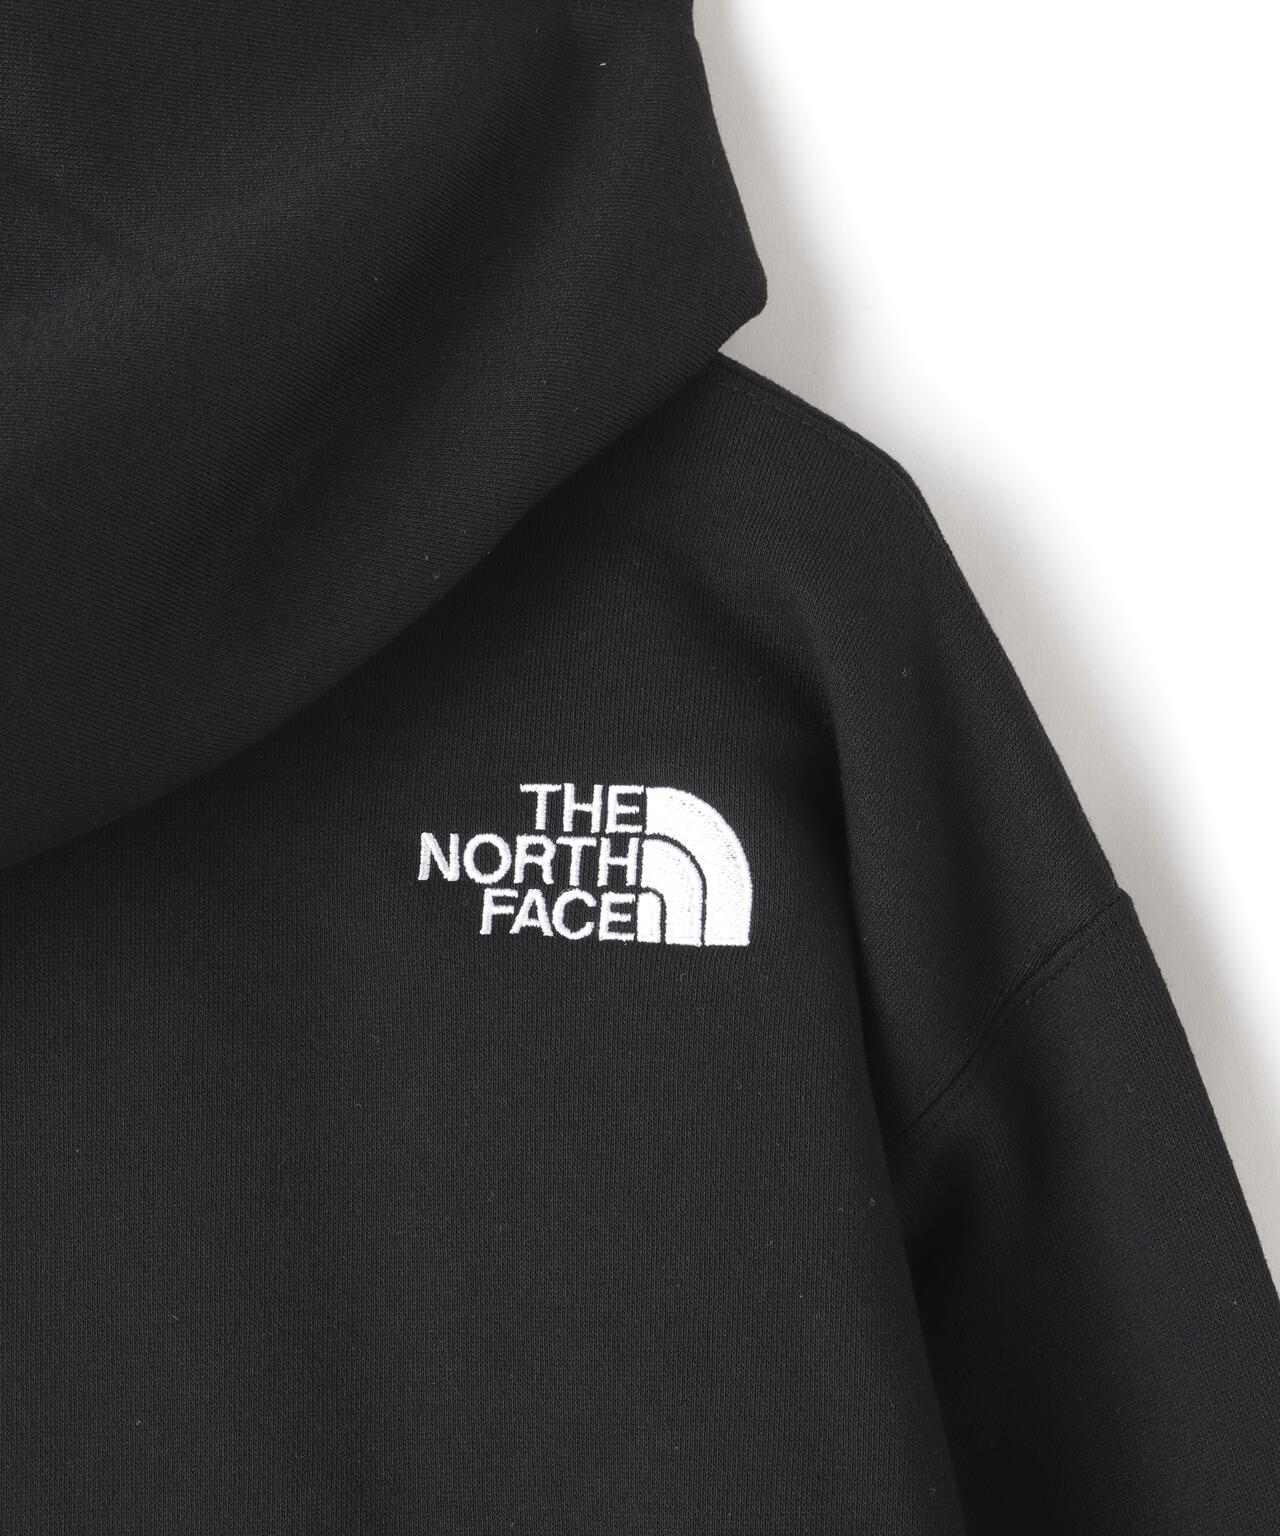 THE NORTH FACE/ザ・ノースフェイス/Square Logo Full Zip/スクエア